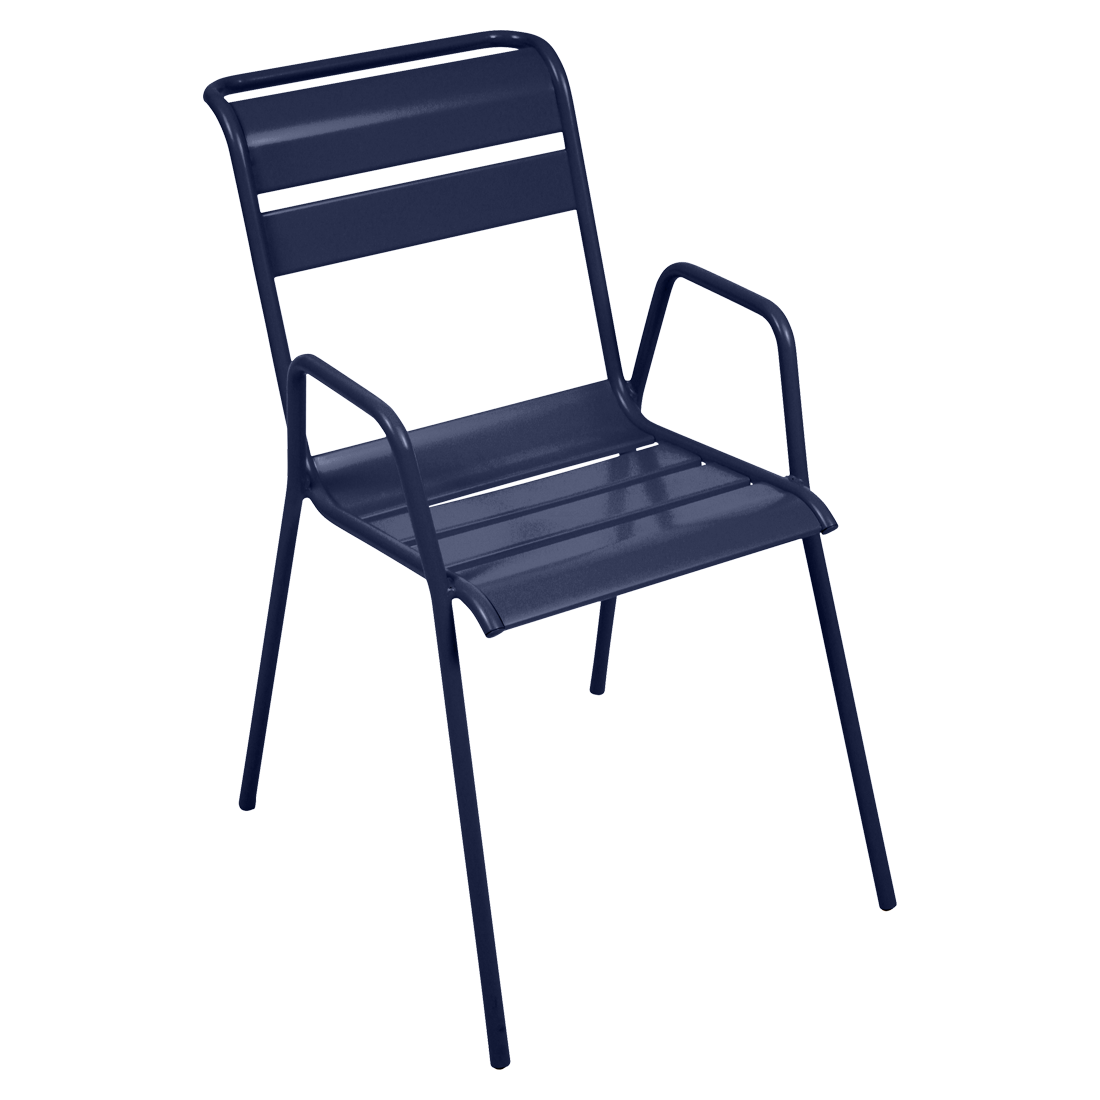 chaise metal, chaise de jardin, chaise bleu